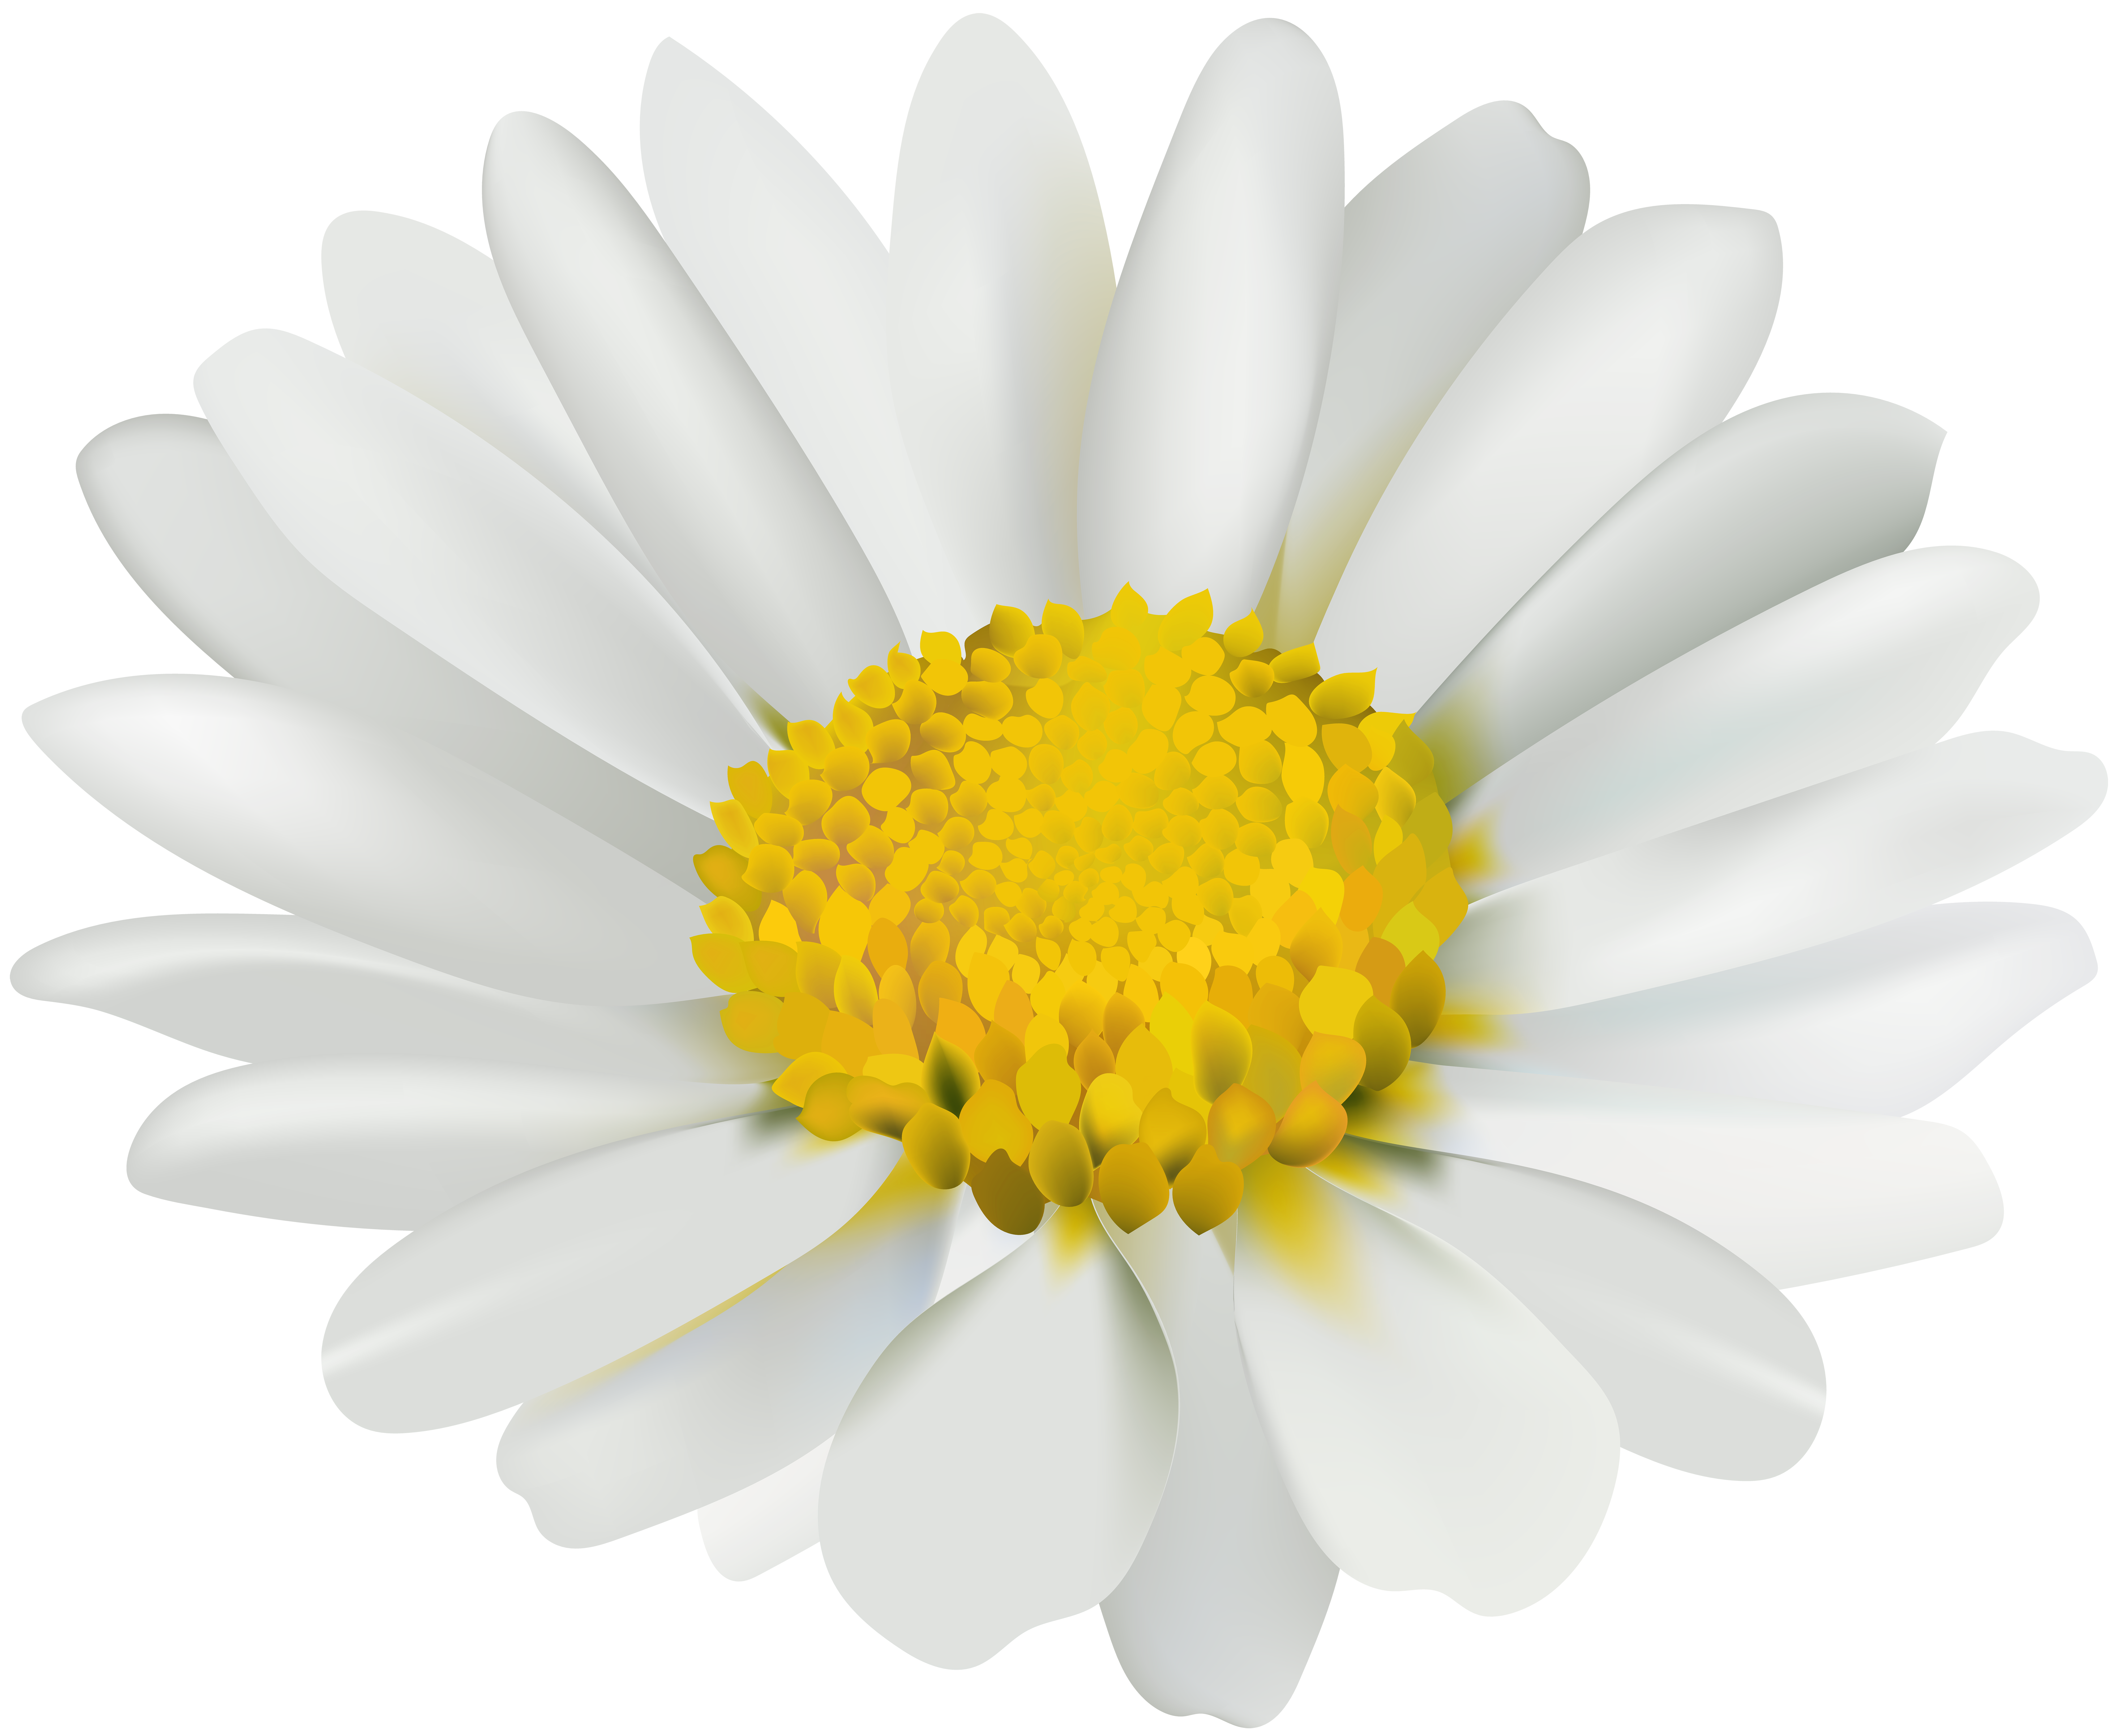 Transparent clip art image. Daisy clipart chamomile flower